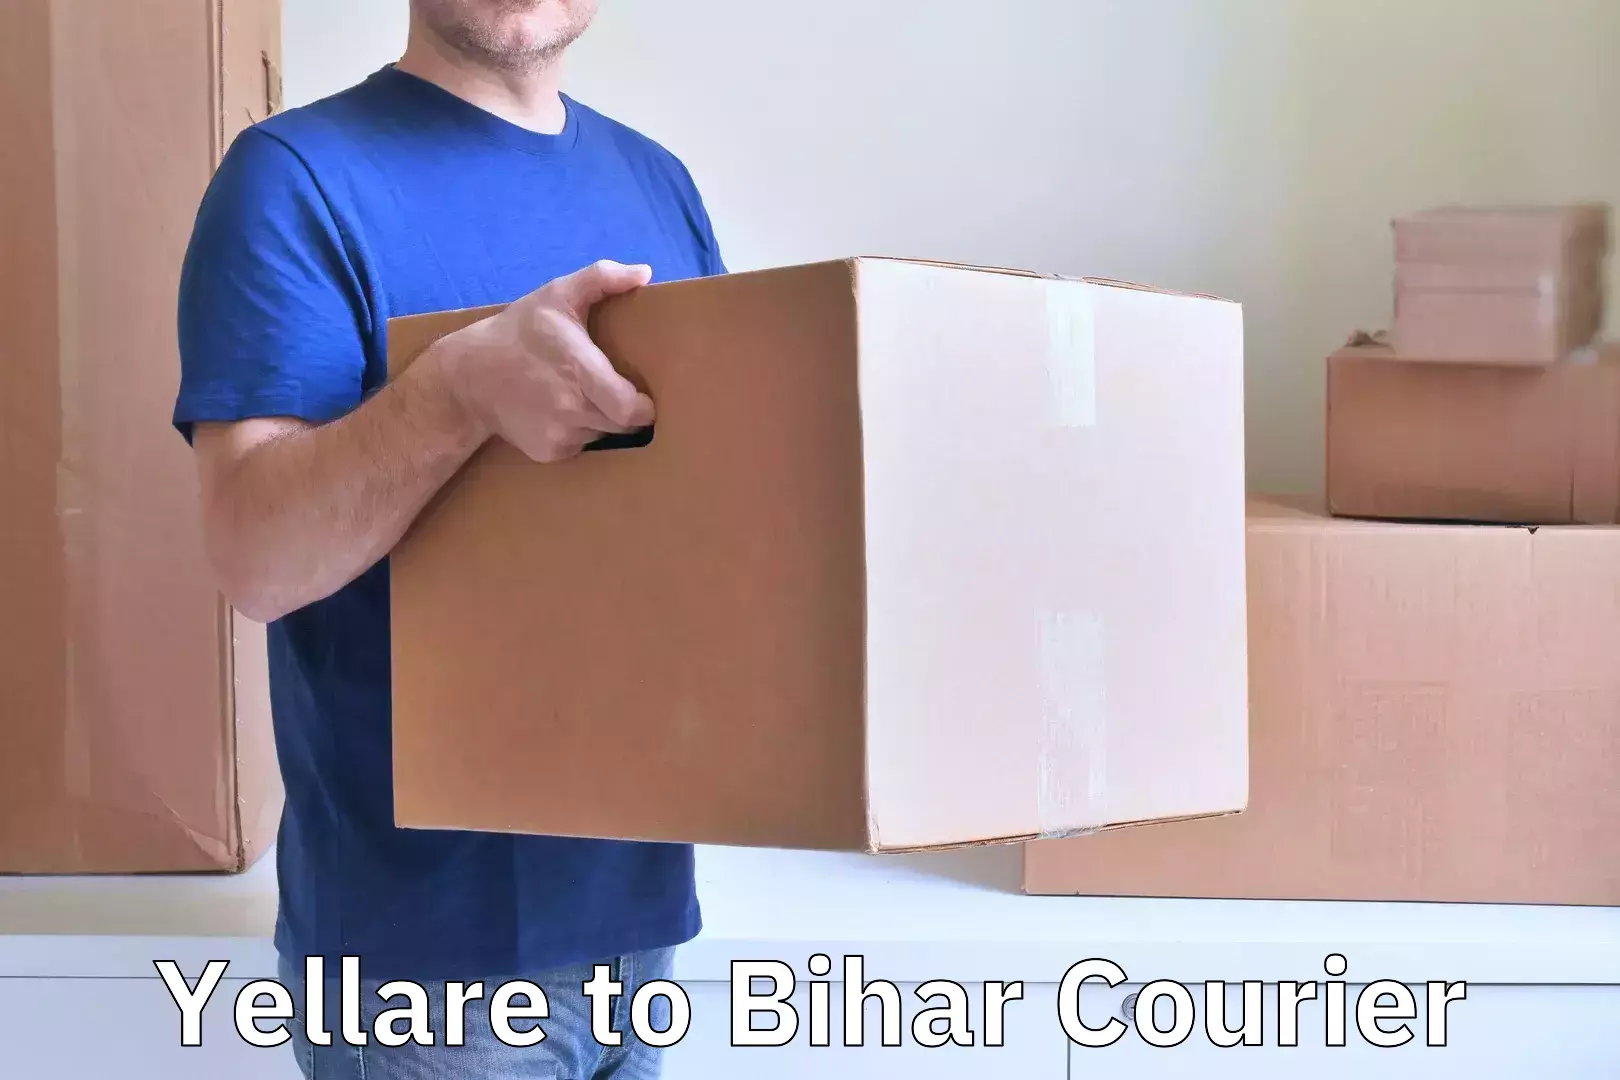 Instant baggage transport quote Yellare to Bihar